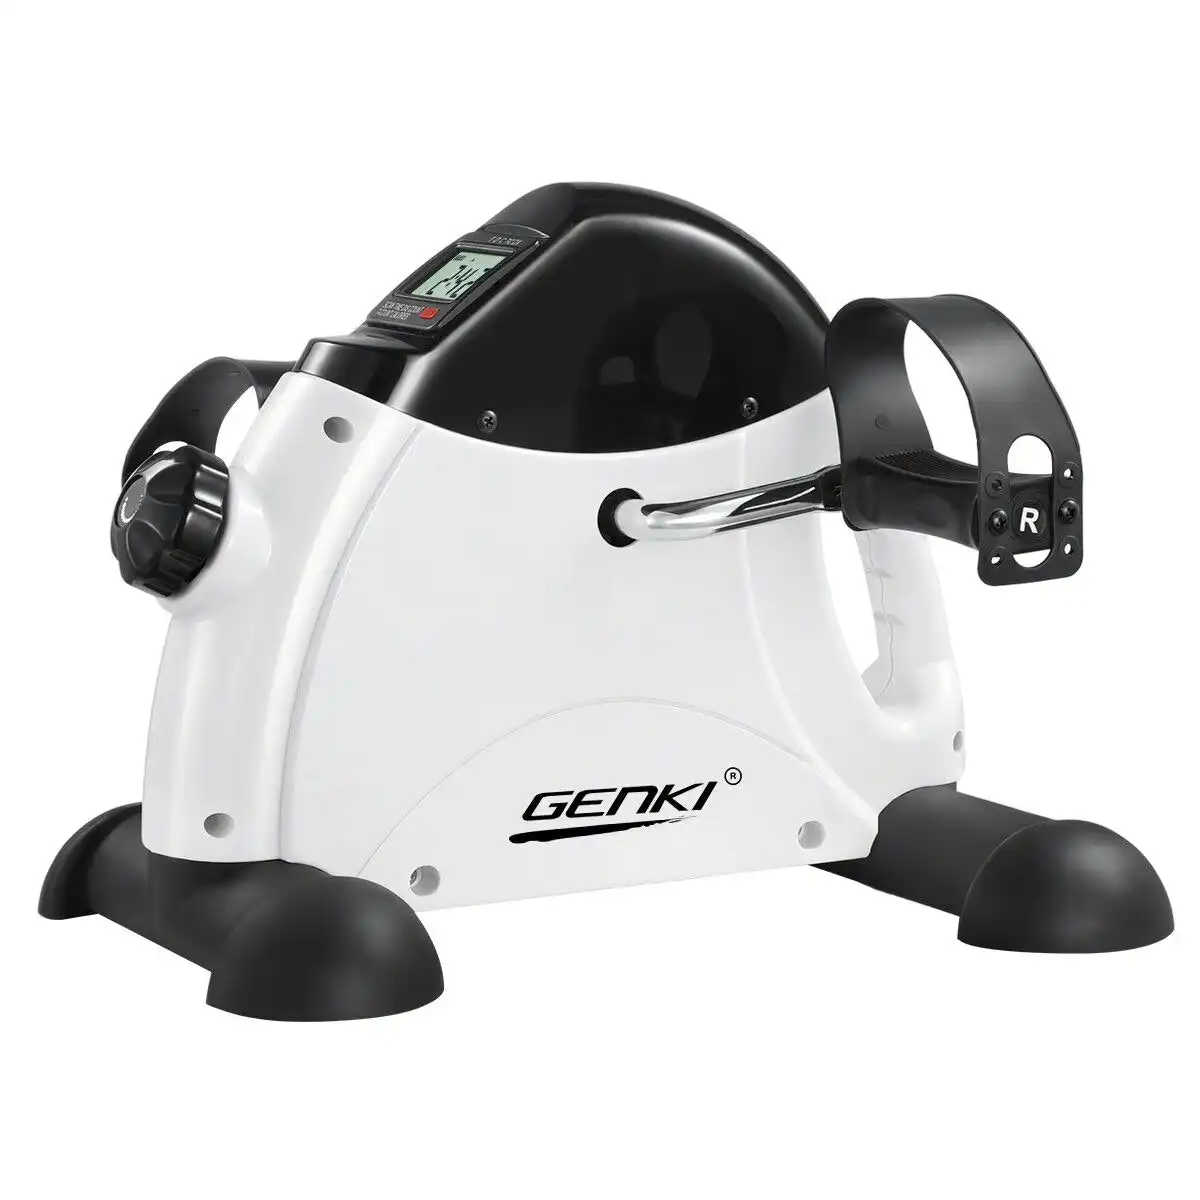 Genki  Mini Exercise Bike Portable Pedal Exerciser Adjustable Home Gym Fitness Trainer